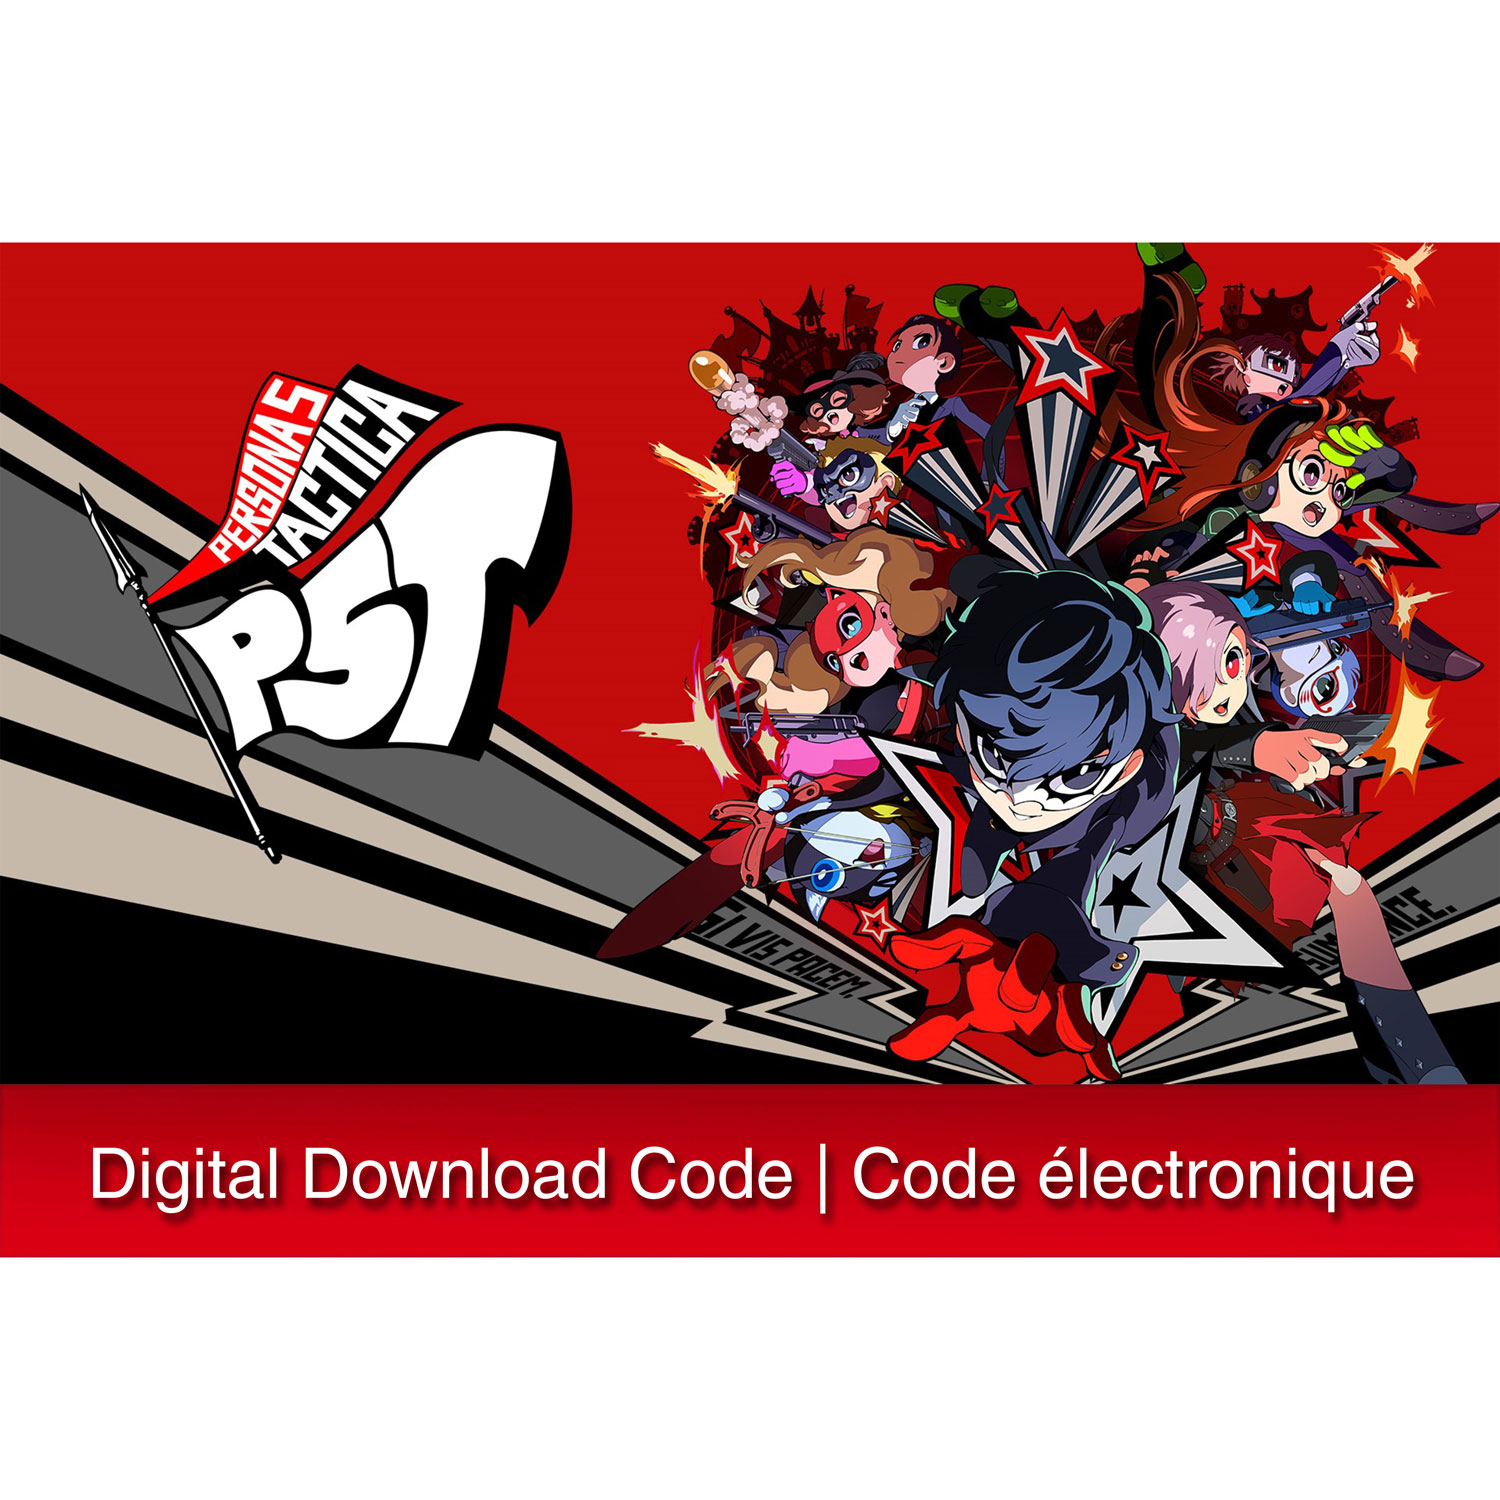 Persona 5 Tactica (Switch) - Digital Download